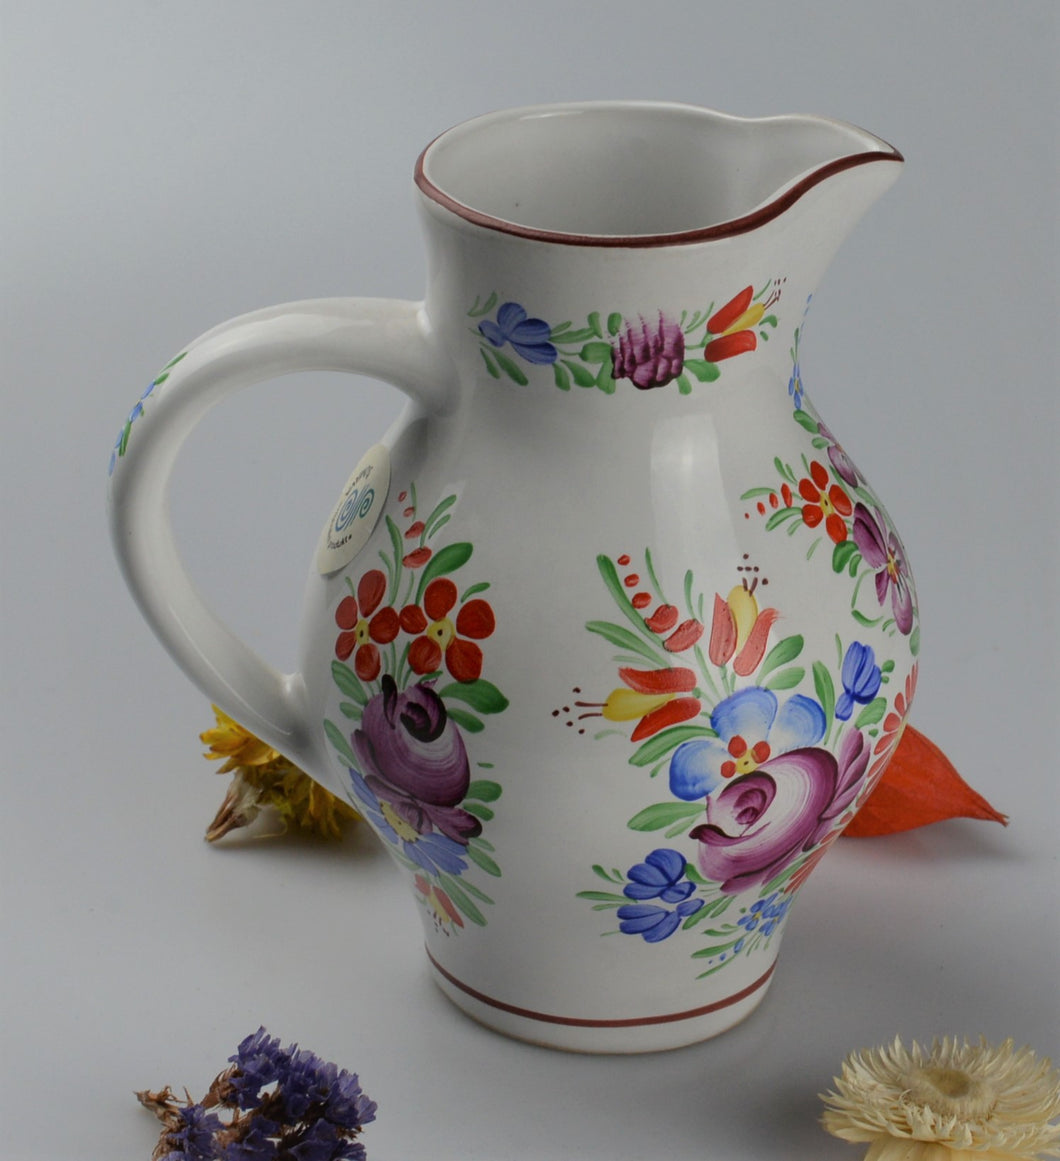 Medium jug from traditionnal czech ceramic - white